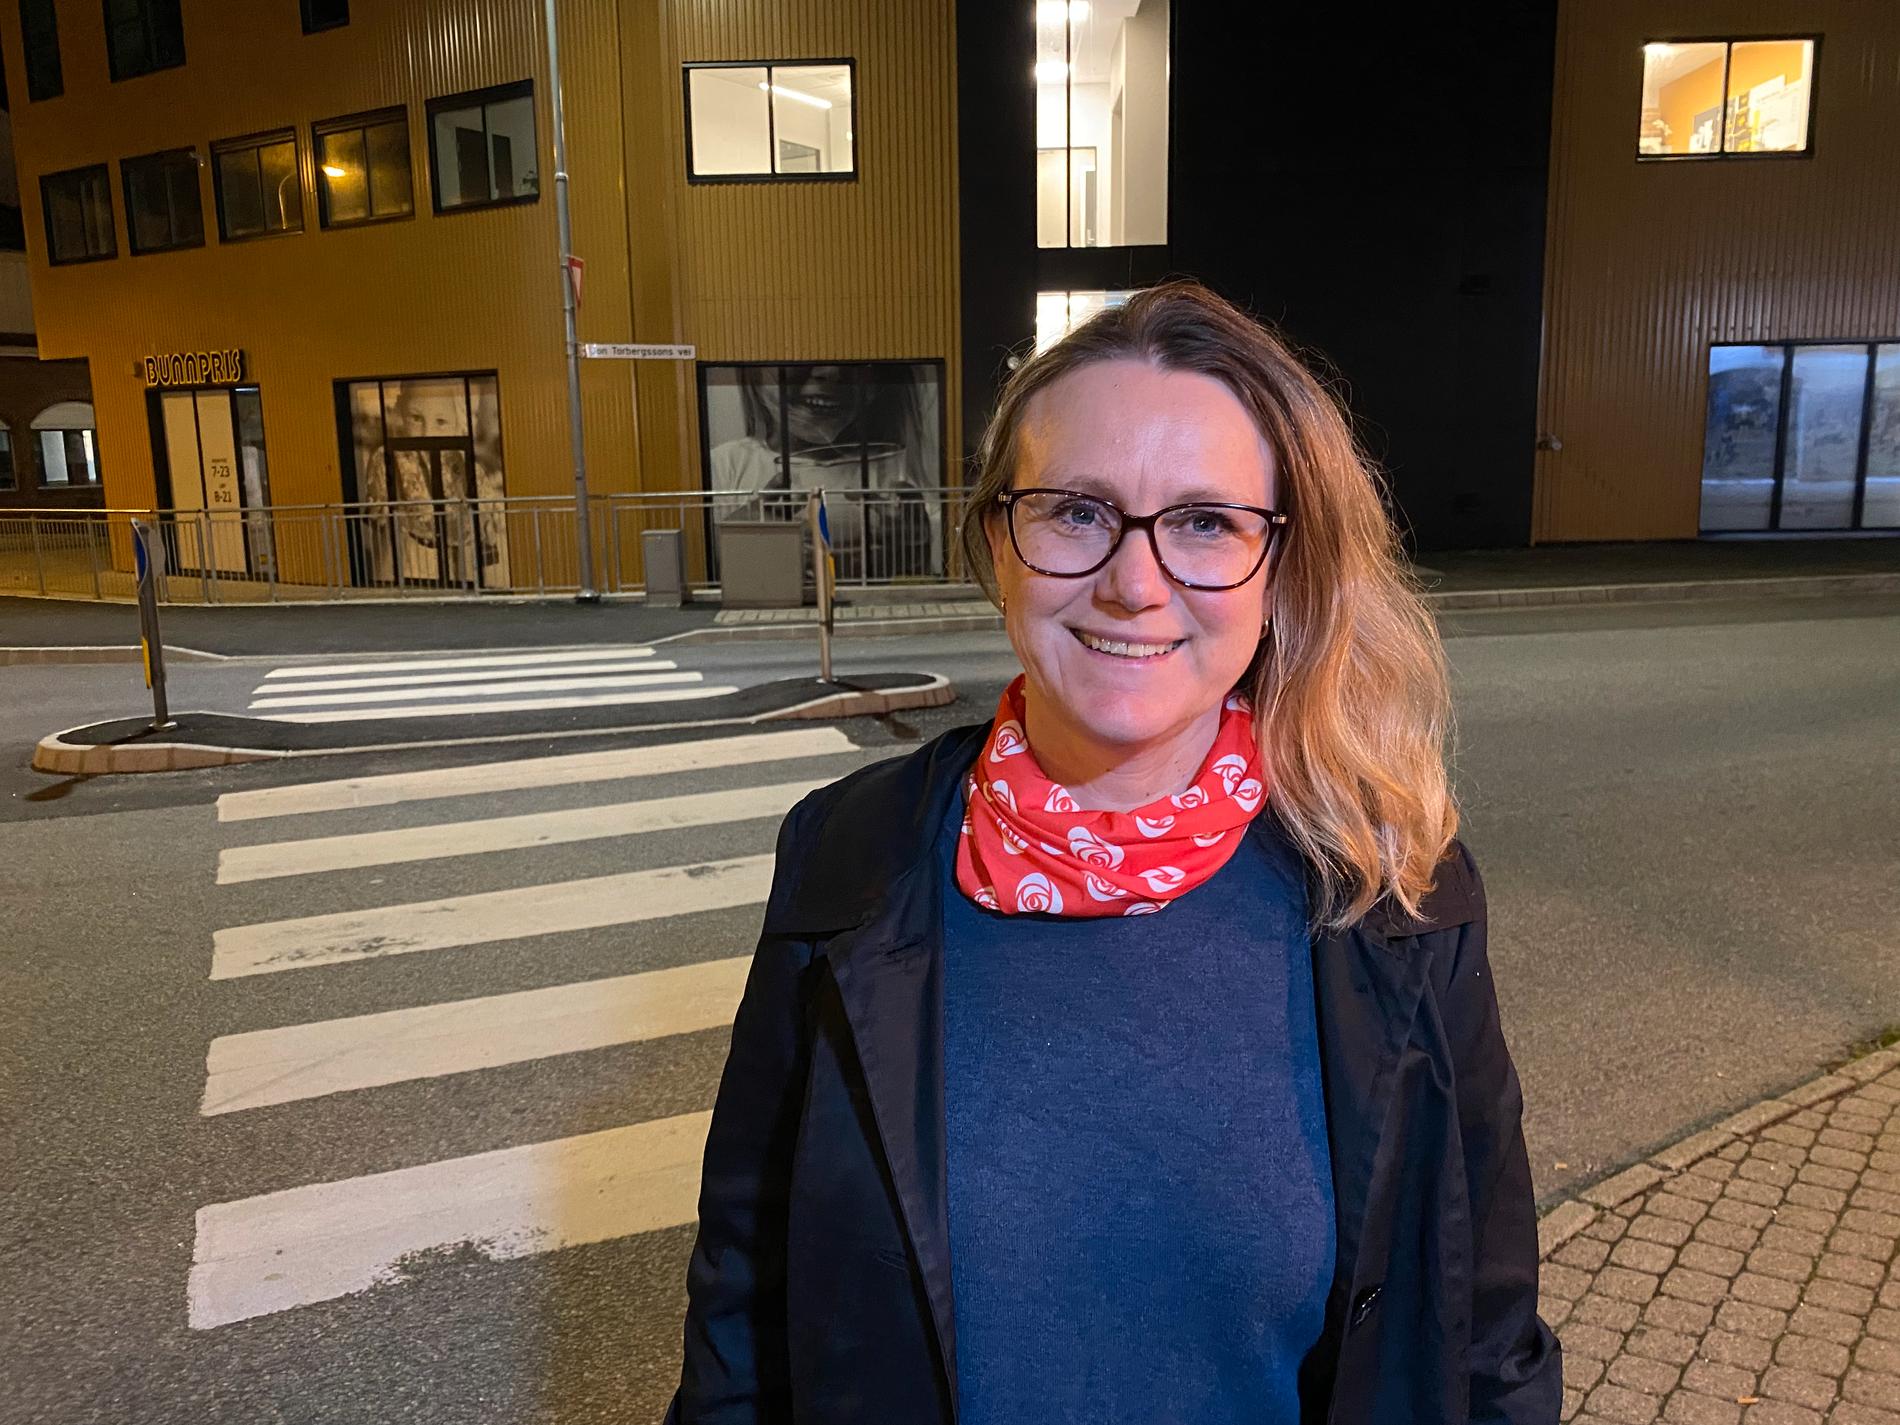 FORNØYD: Kristine Enger fra Arbeiderpartiet er fornøyd med årets valgresultat.